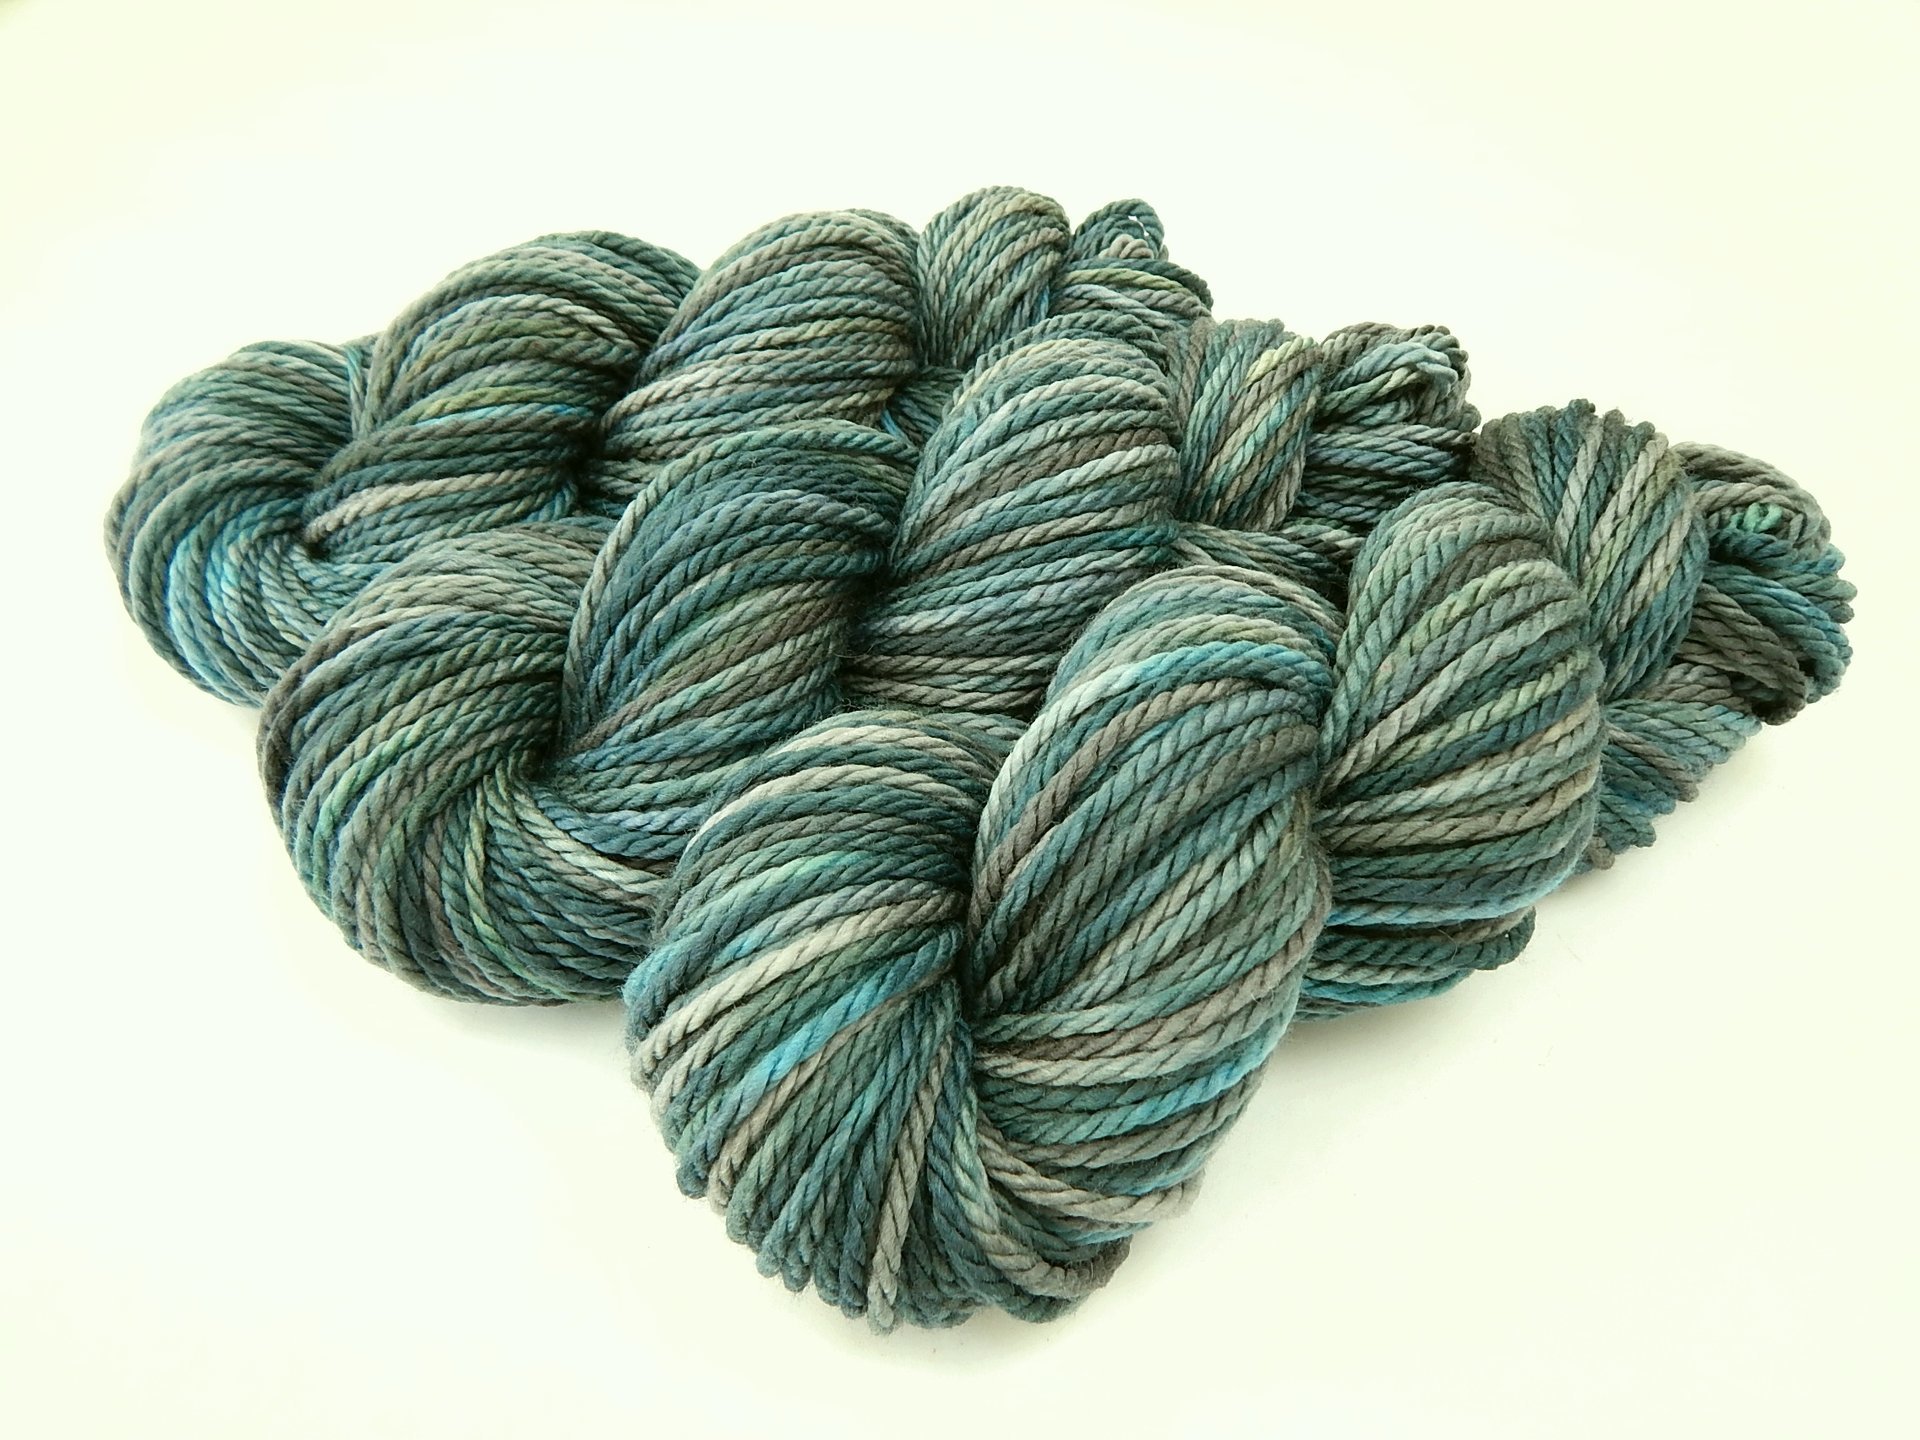 Bulky Hand Dyed Yarn, 100% Superwash Merino Wool - Storm Clouds - Slate Blue Grey Chunky Knitting Yarn